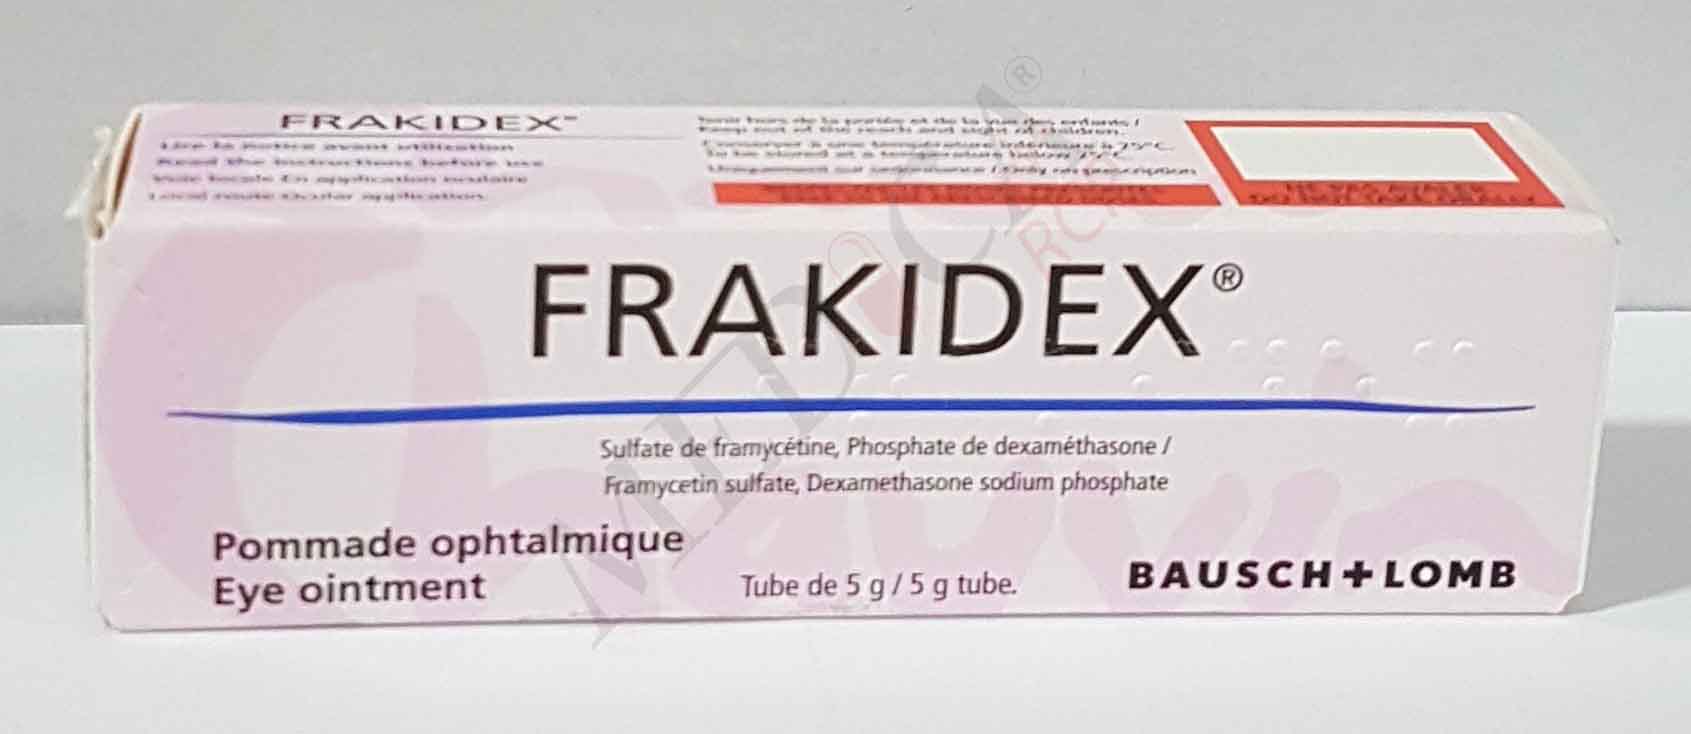 Frakidex Pommade ophtalmique°